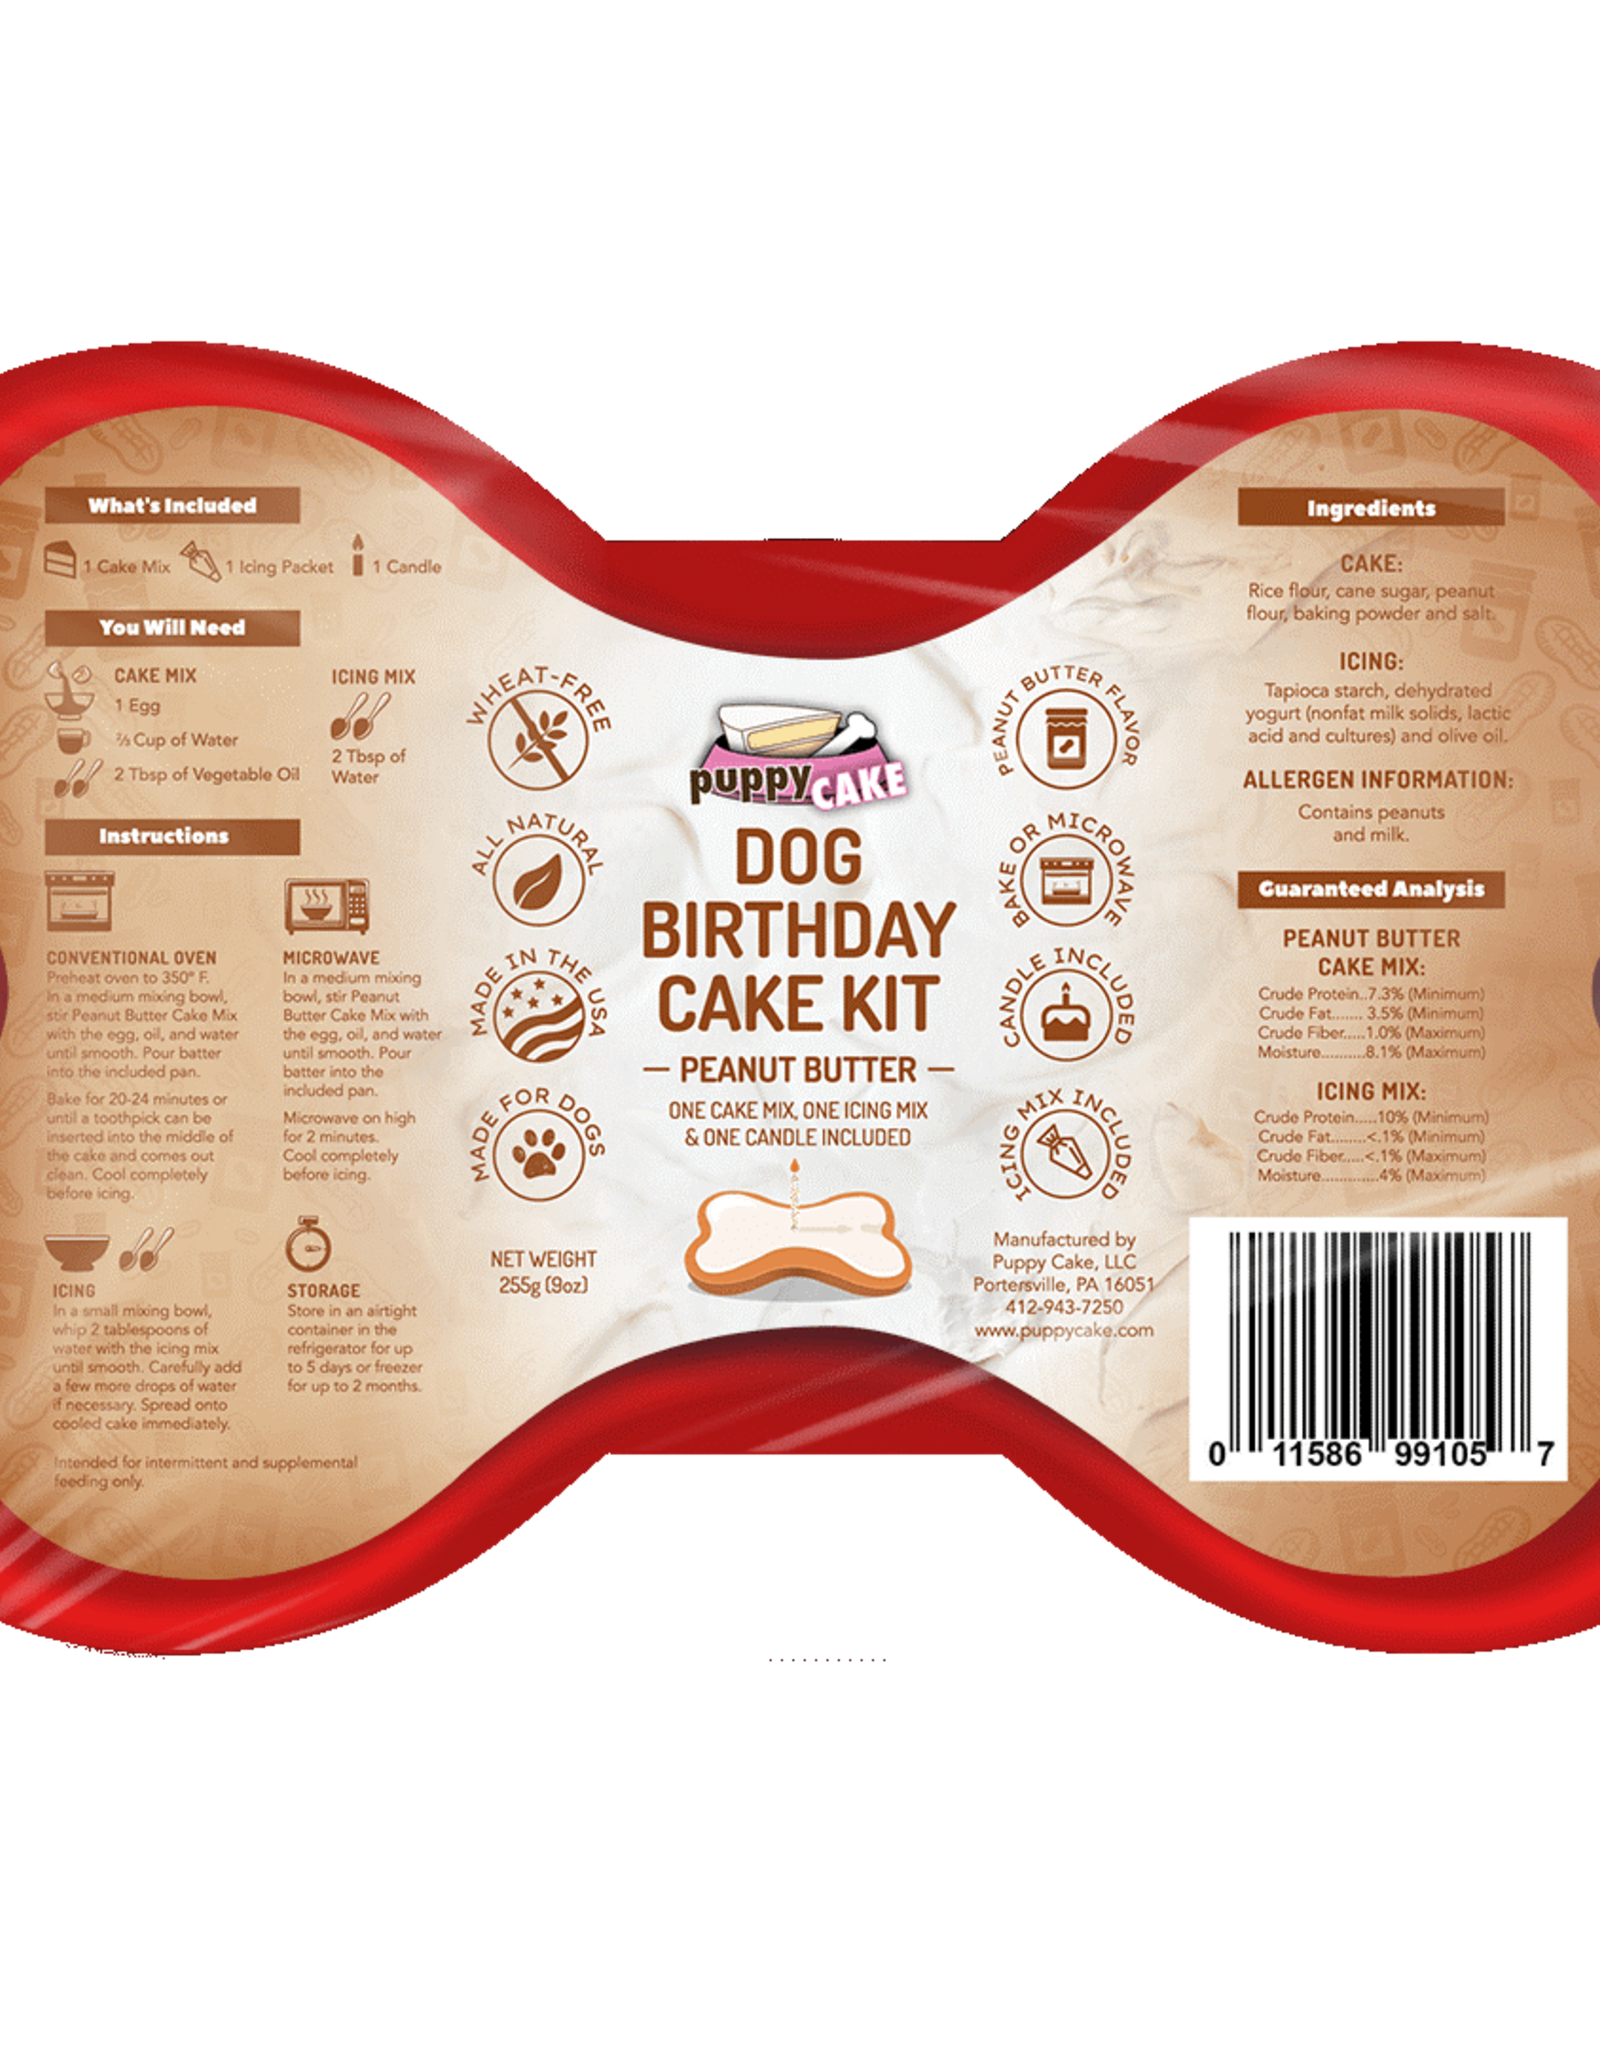 Puppy Cake Birthday Kit - Peanut Butter